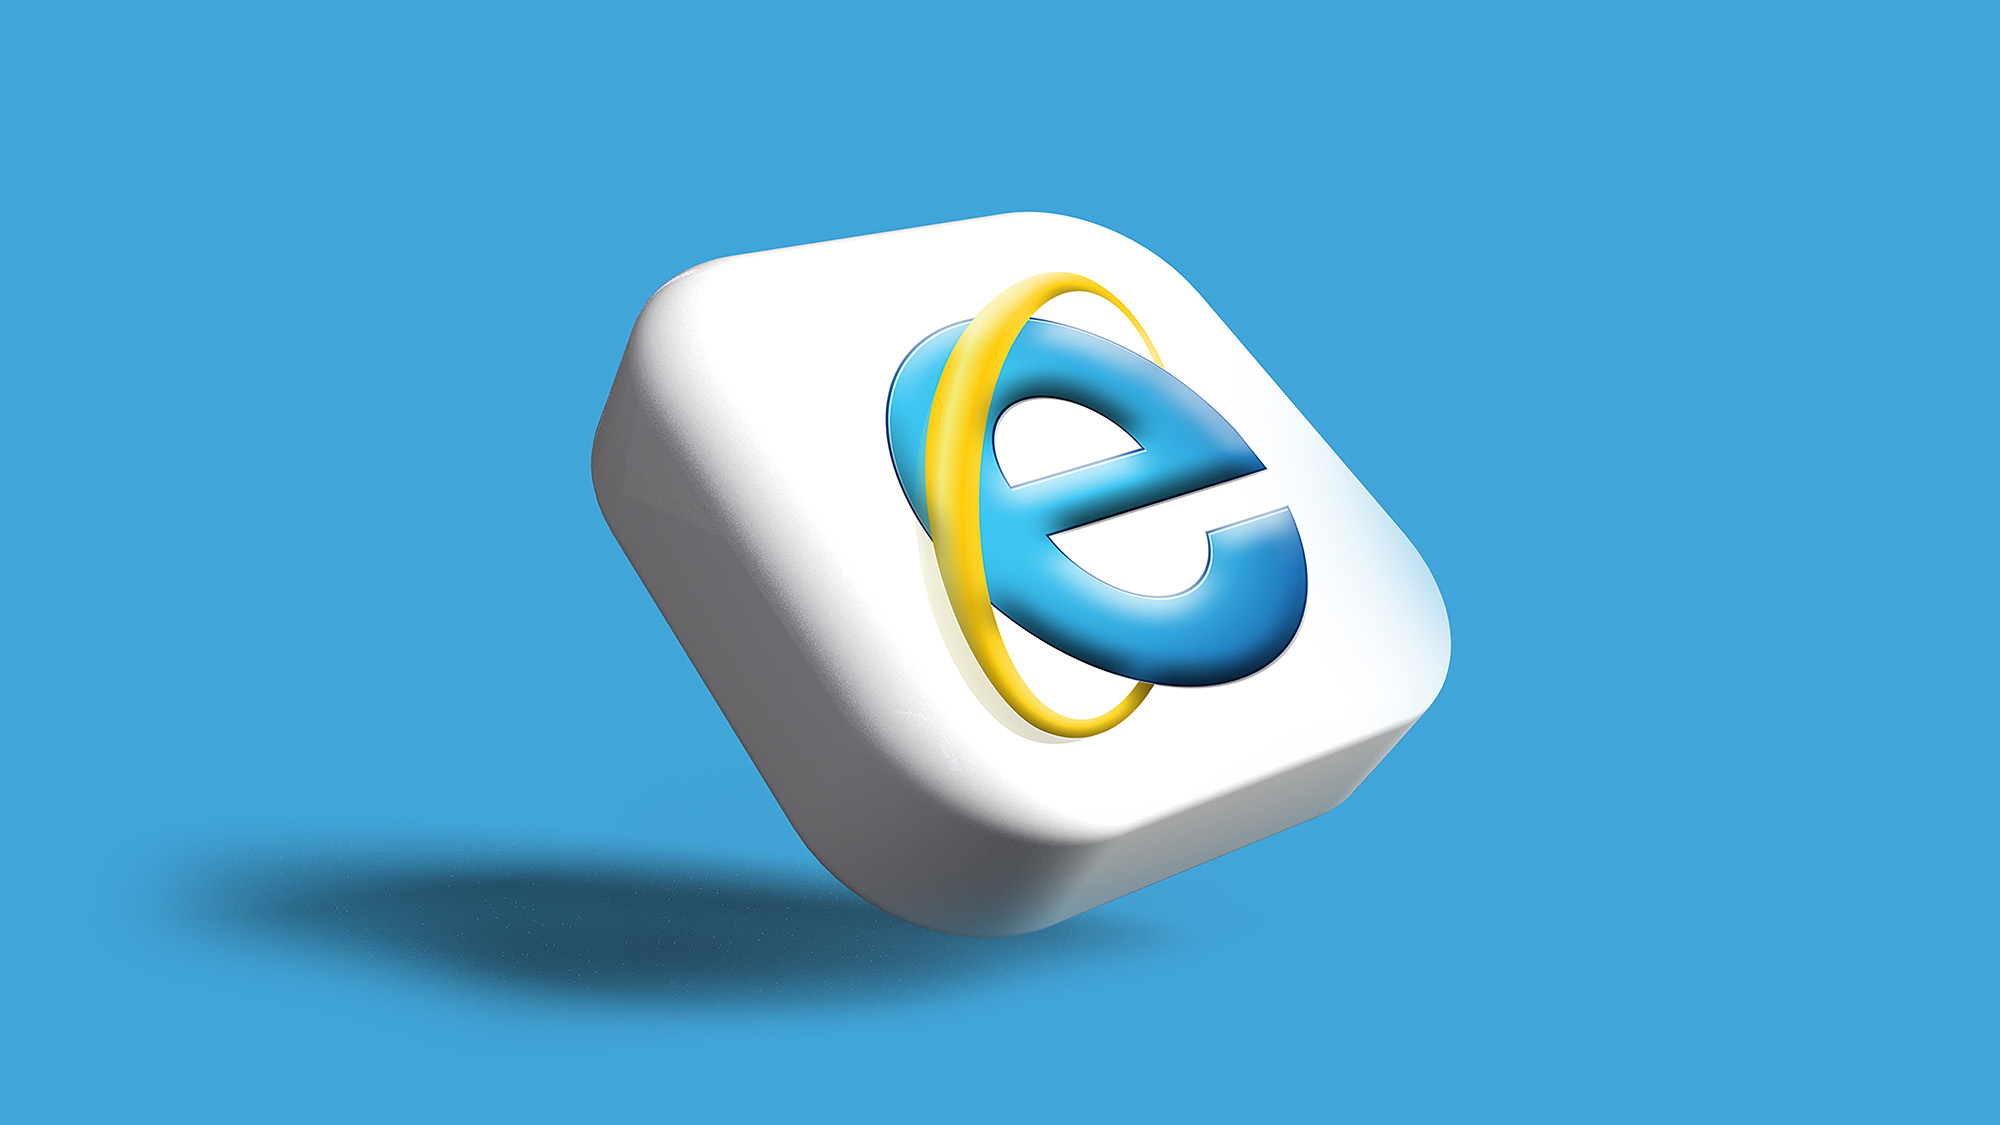 3D rendering of the Internet Explorer logo against a blue background.